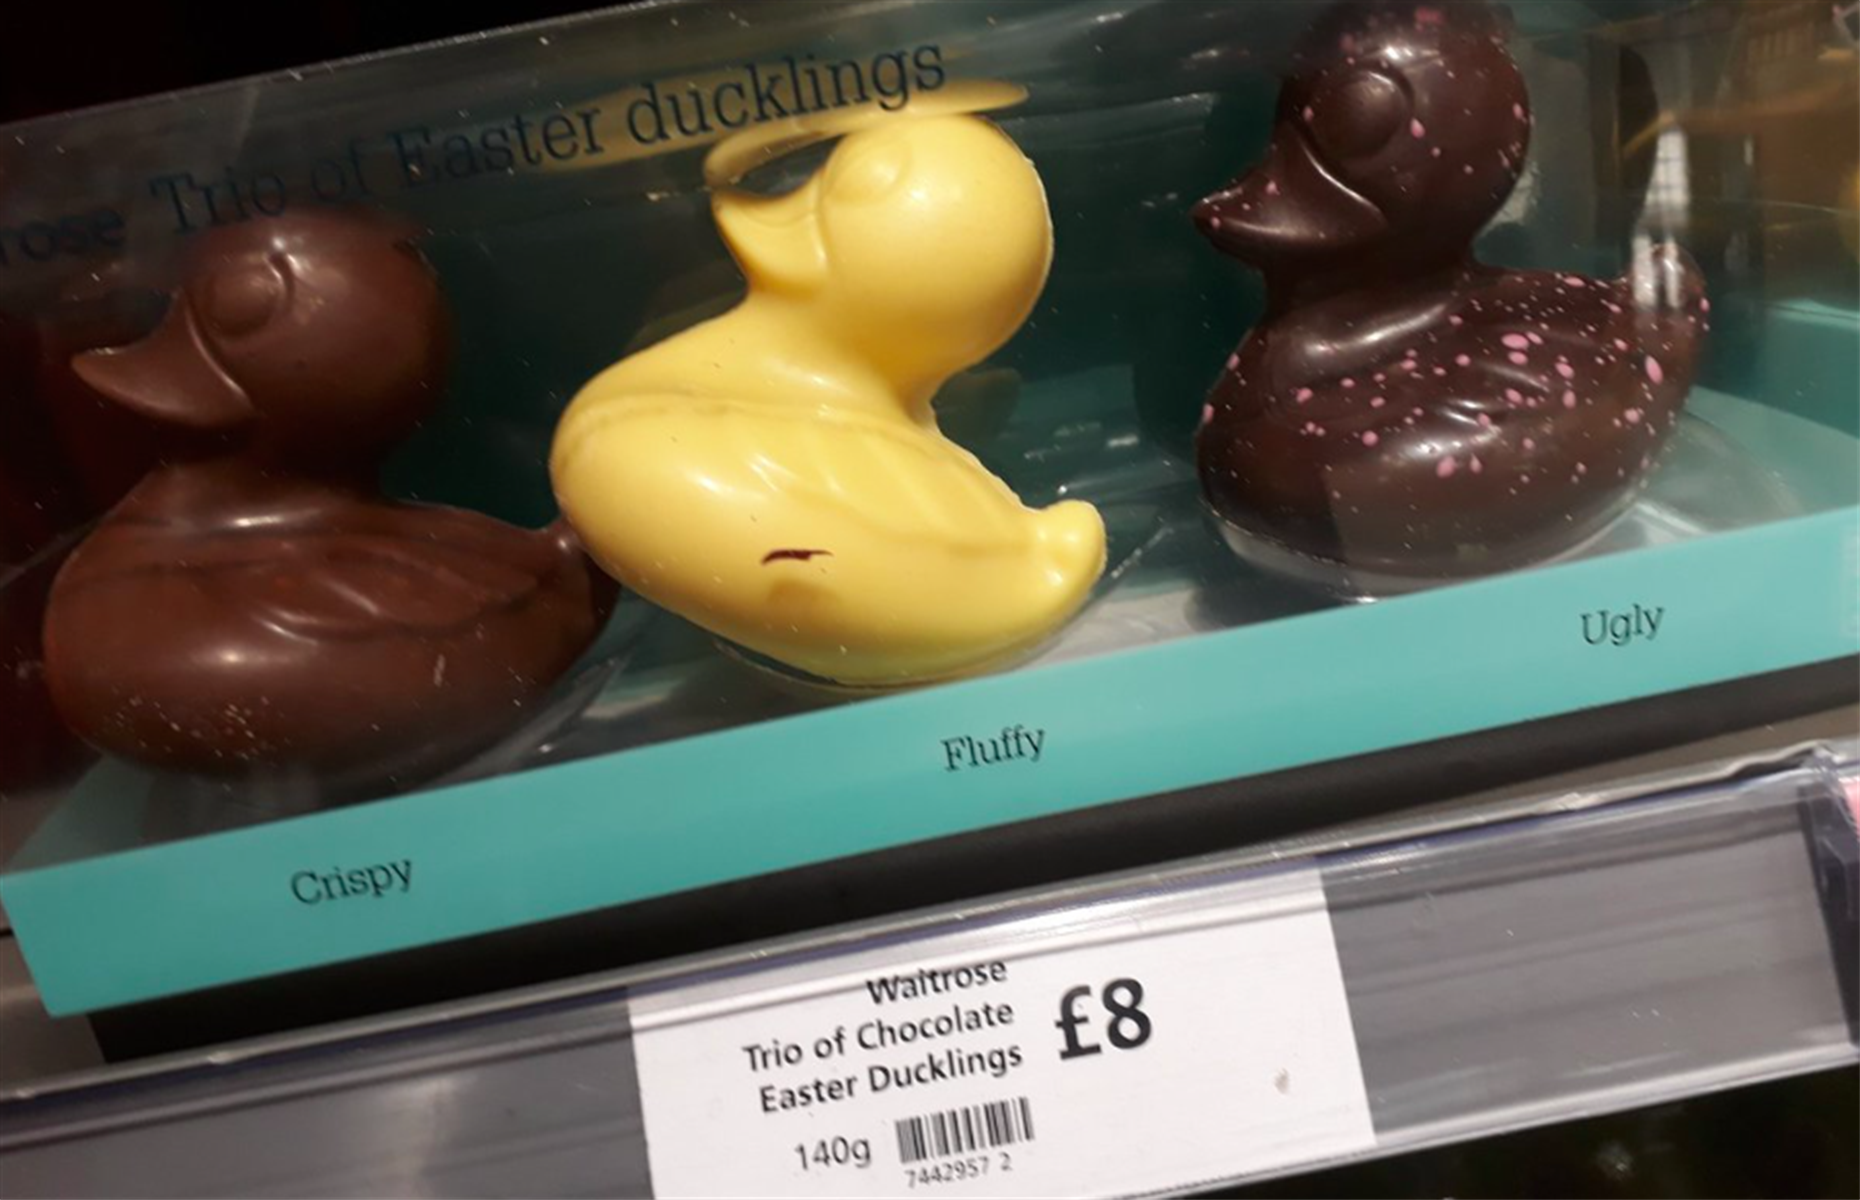 2019: Waitrose ugly ducklings